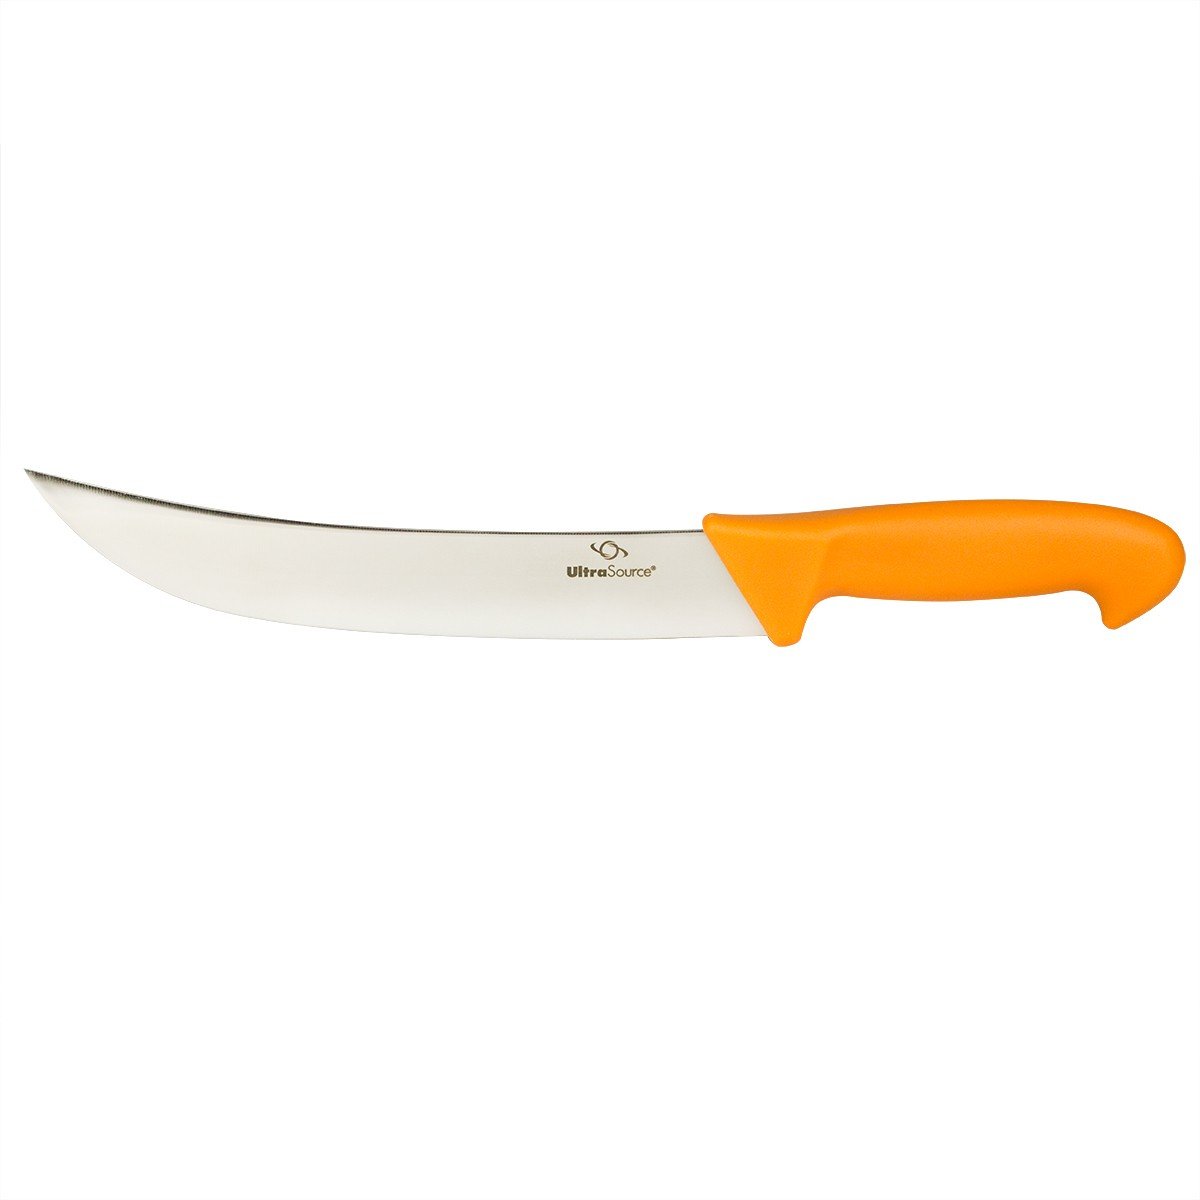 https://www.dontwasteyourmoney.com/wp-content/uploads/2020/06/ultrasource-449413-cimeter-blade-butcher-knife-10-inch-butcher-knives.jpg